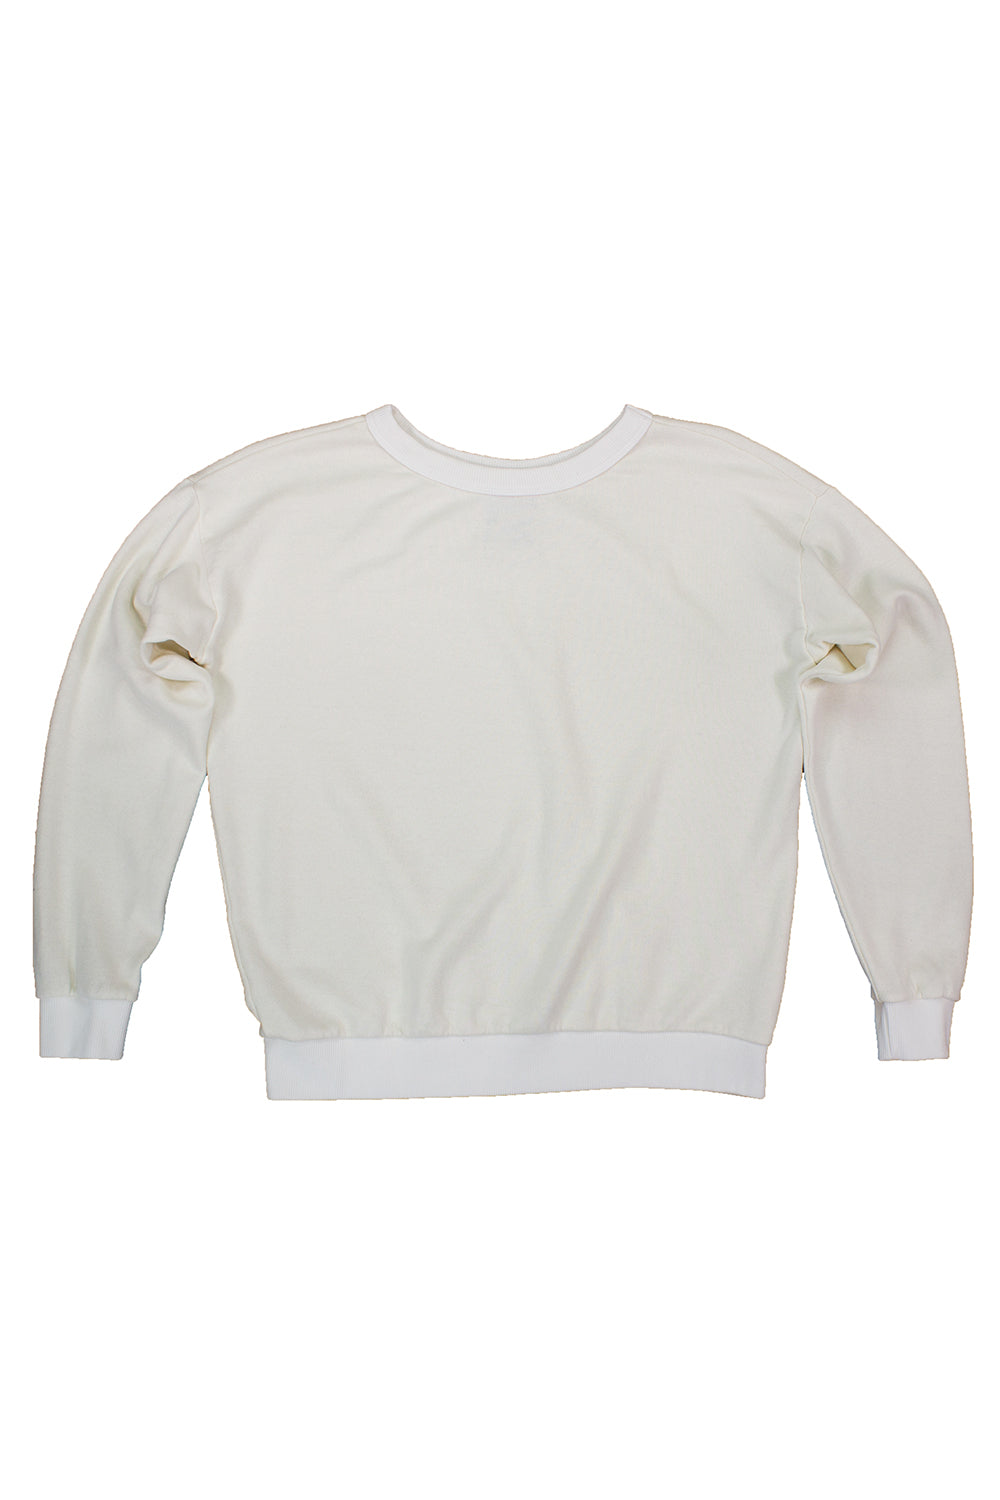 Laguna Cropped Sweatshirt | Jungmaven Hemp Clothing & Accessories / Color: Washed White